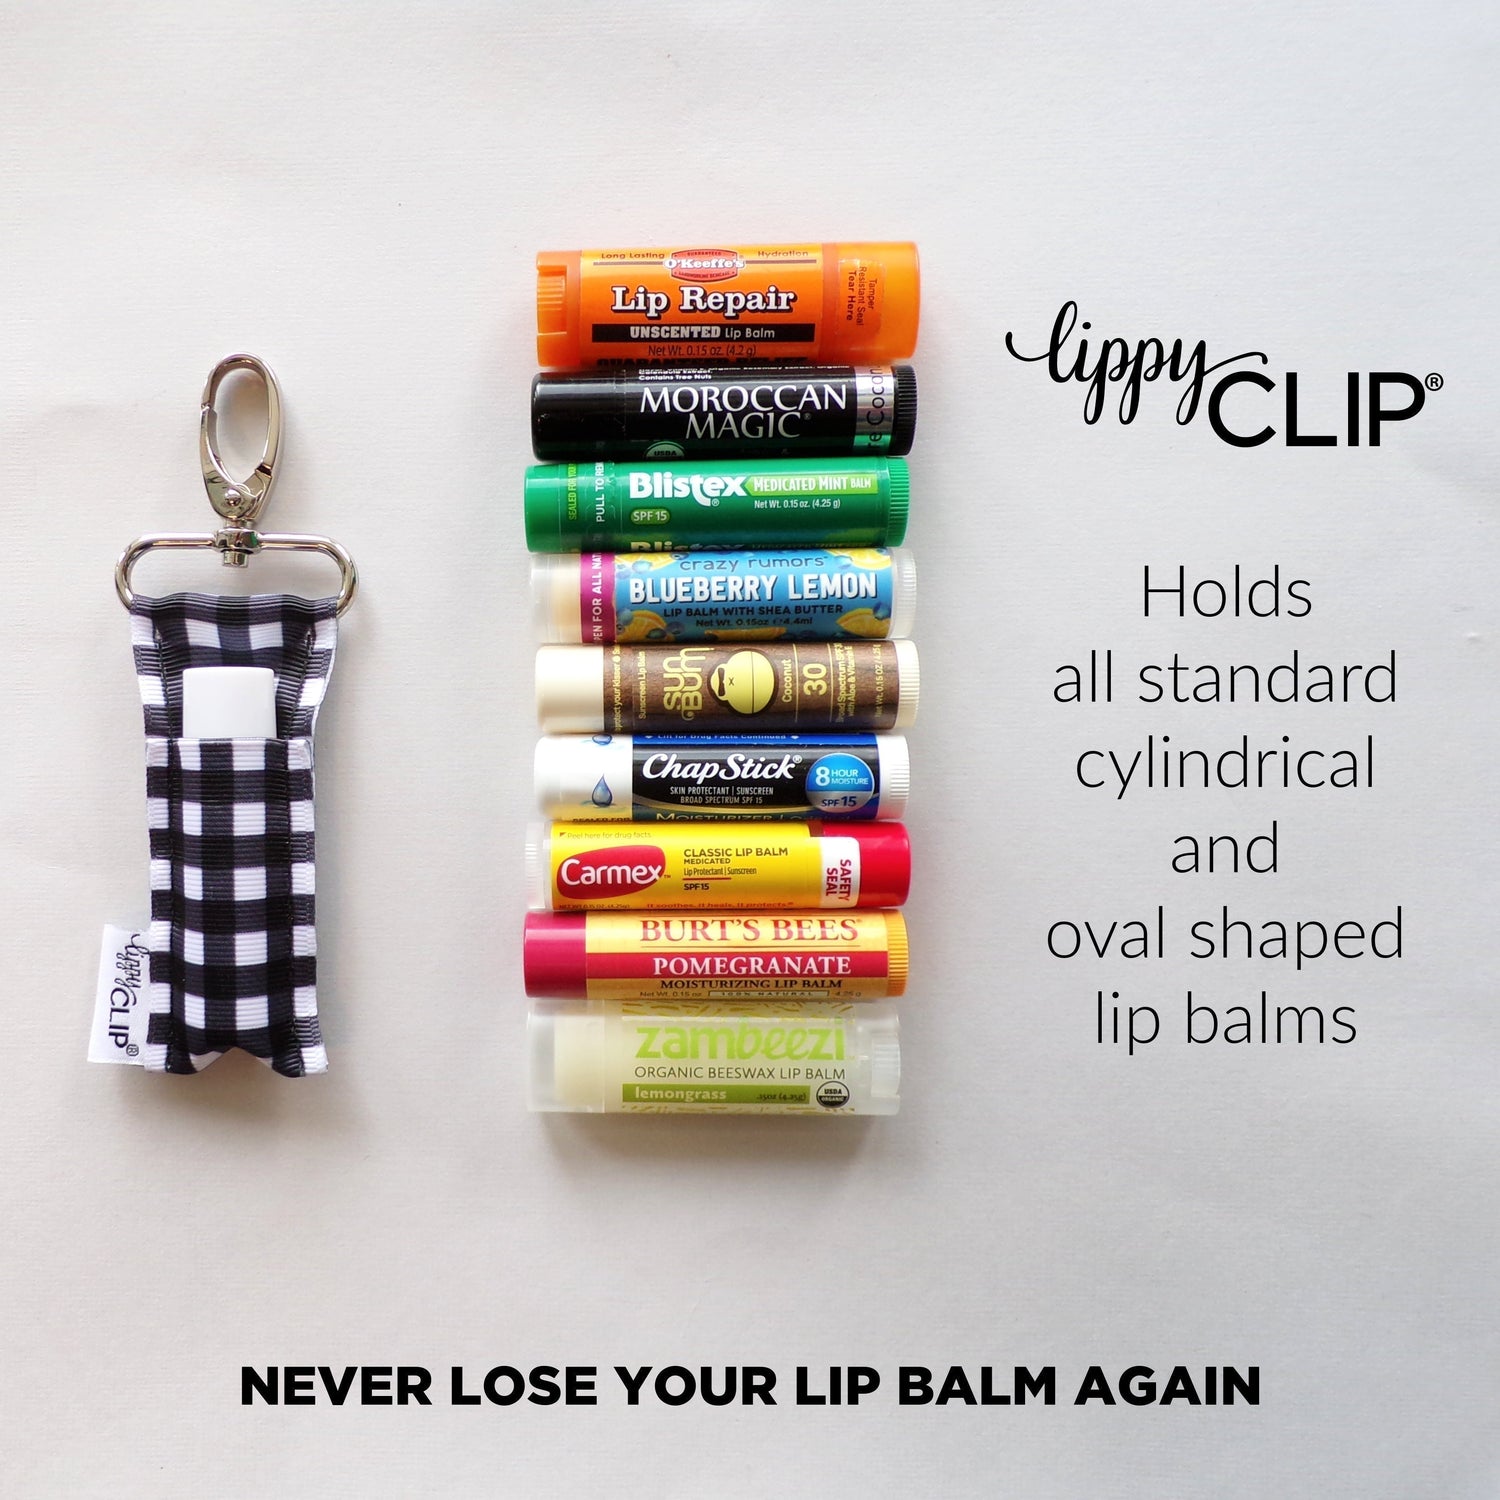 Pineapple Explosion LippyClip® Lip Balm Holder